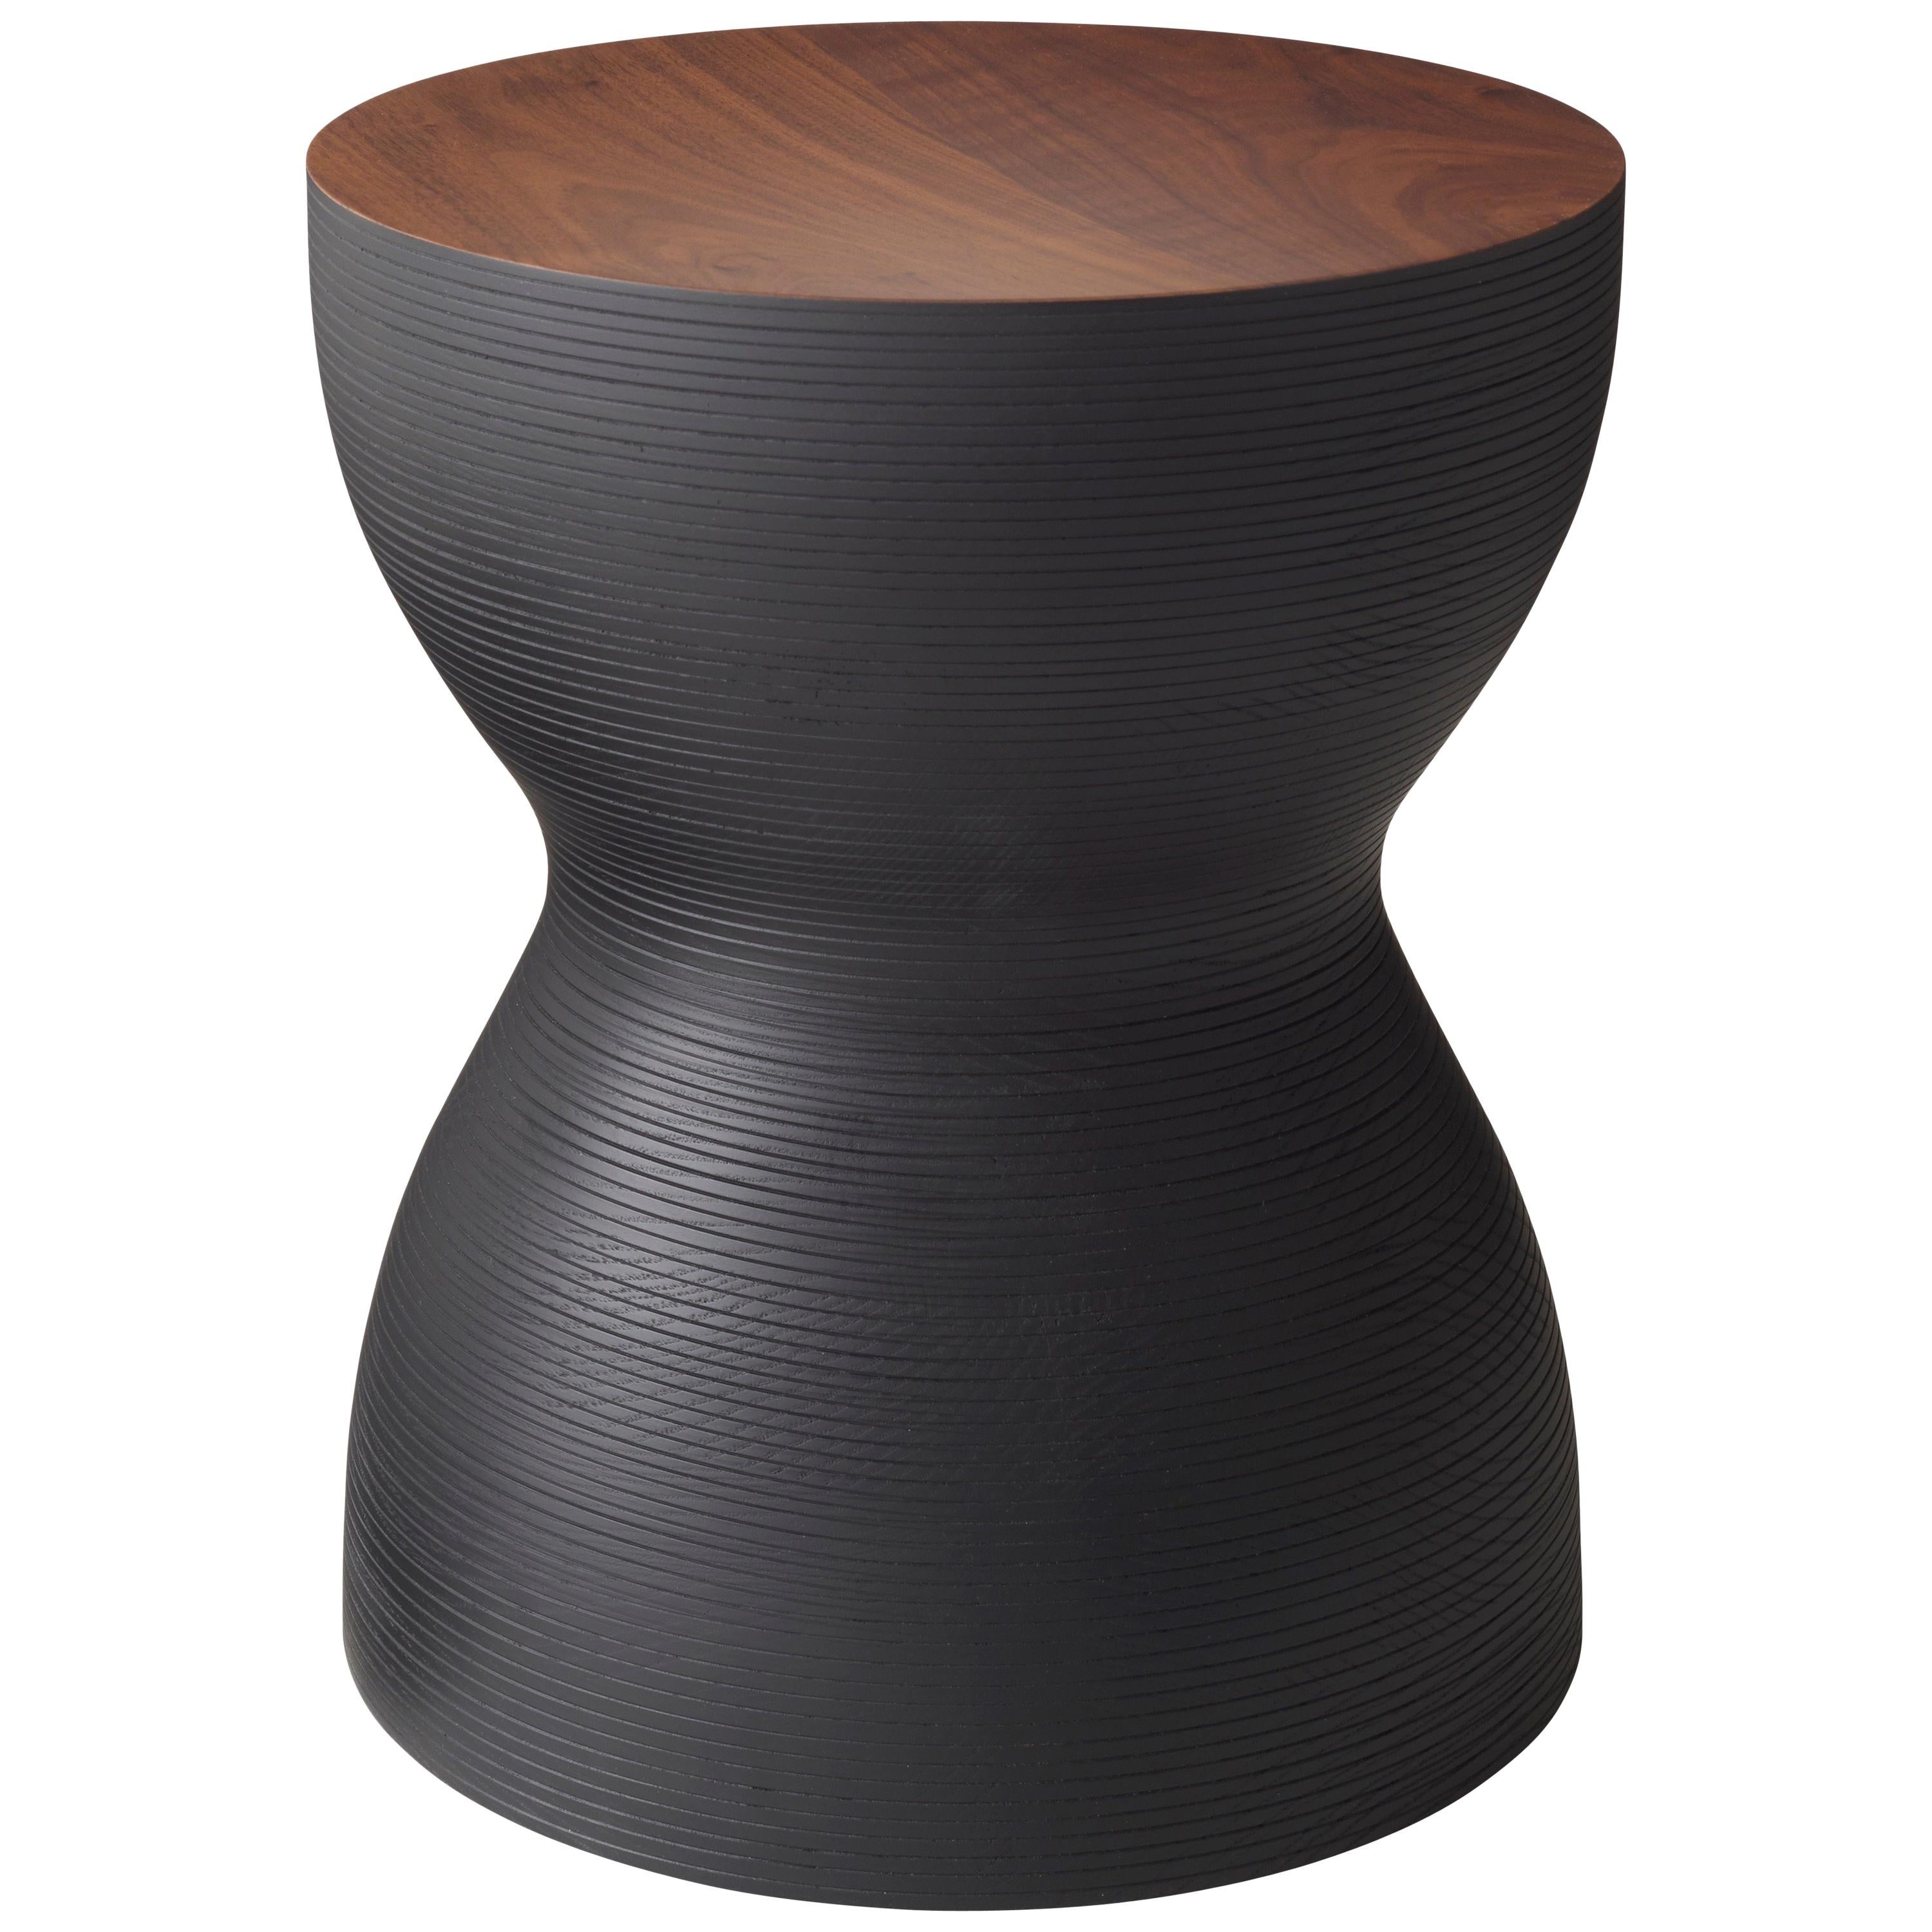 YoYo Stool, Hand-Turned, Hardwood Side Table or Seating, in Black